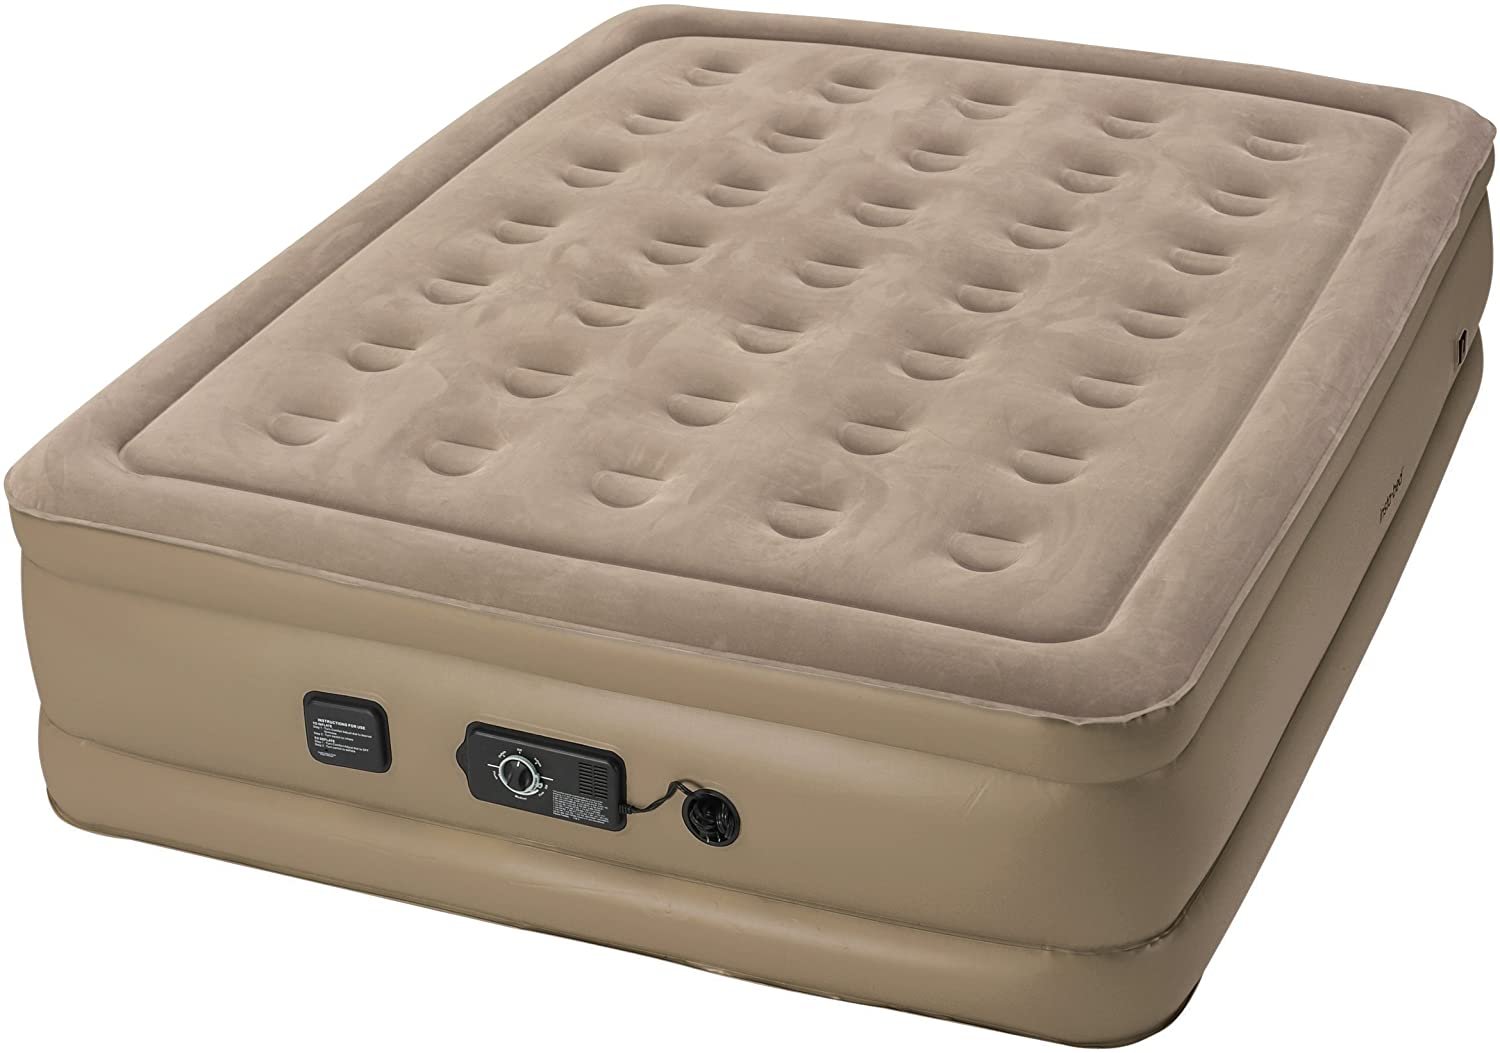 permanent use air mattress reviews